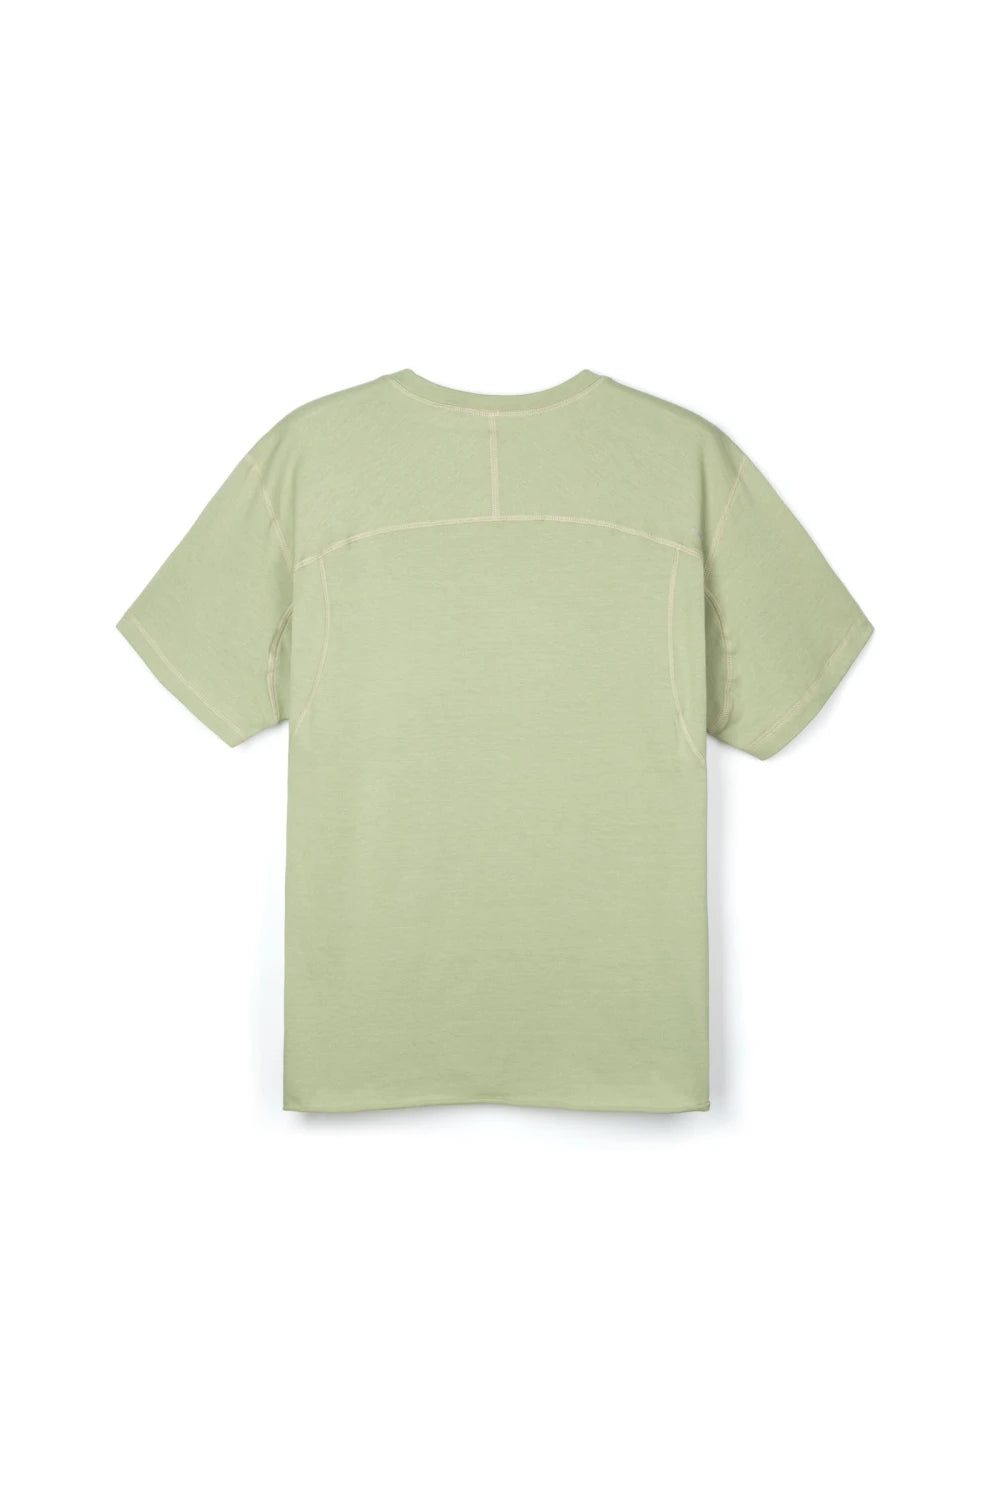 Satisfy SoftCell™ Cordura Climb T-Shirt - Sage Green